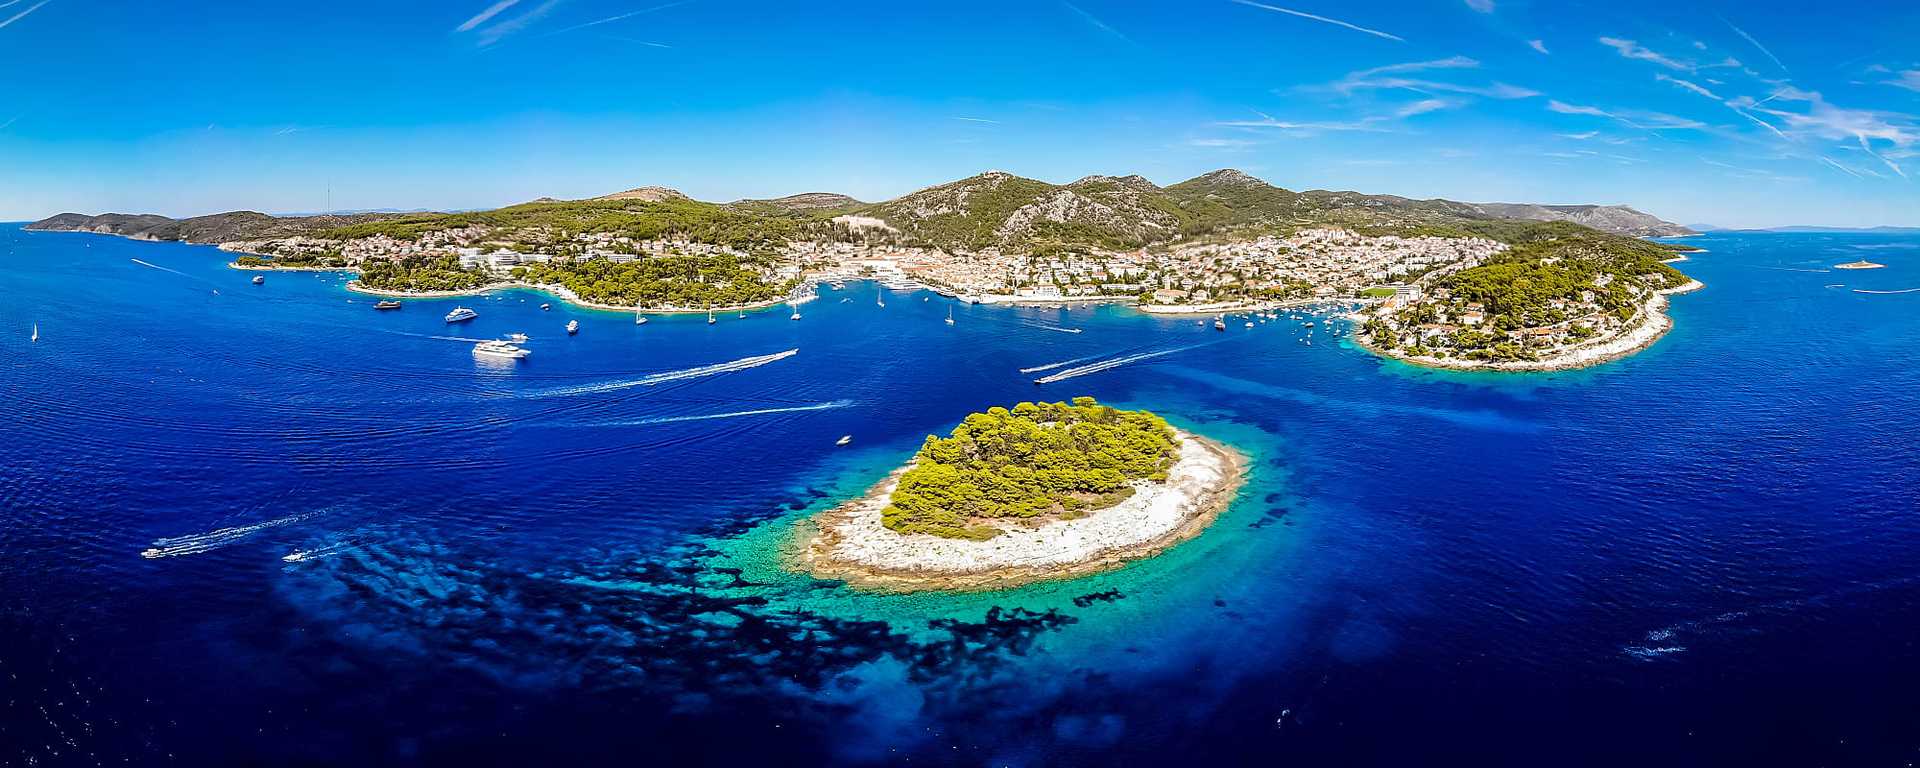 Paklinski islands in Hvar, Croatia